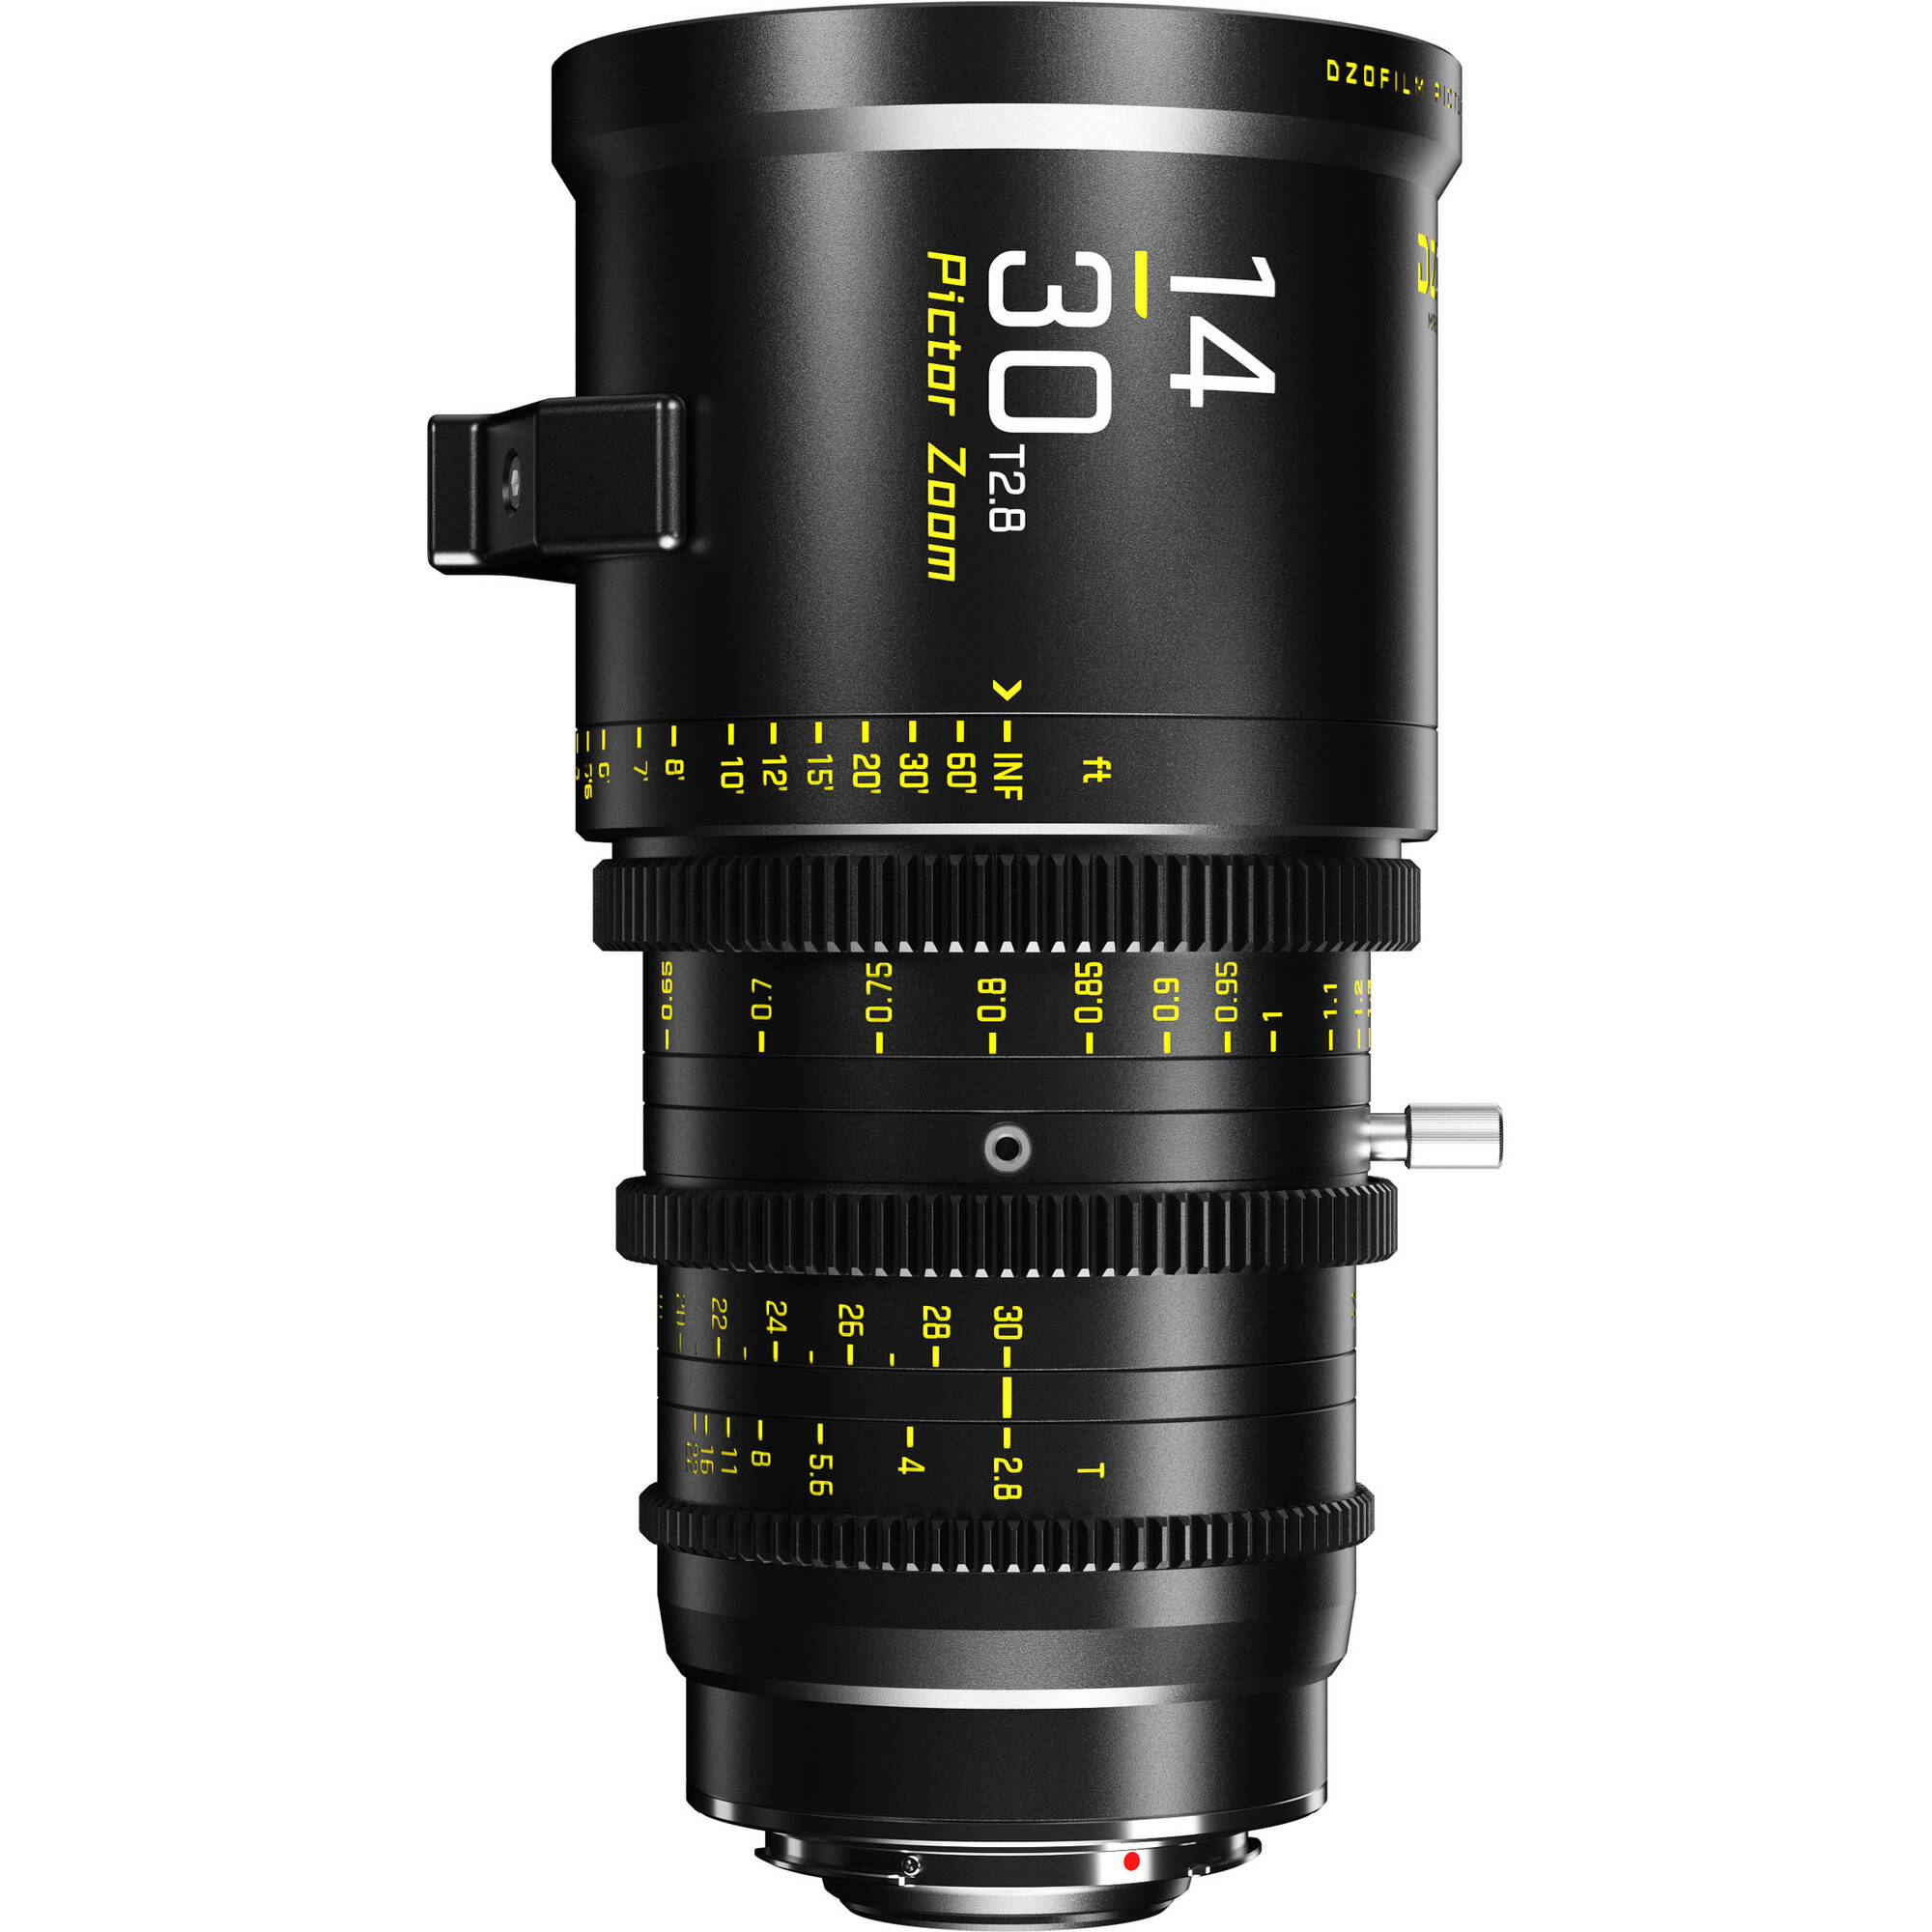 DZOFilm Pictor 14-30 mm T2.8 Super35 Lente de zoom parfocal (monturas PL y EF, negro)